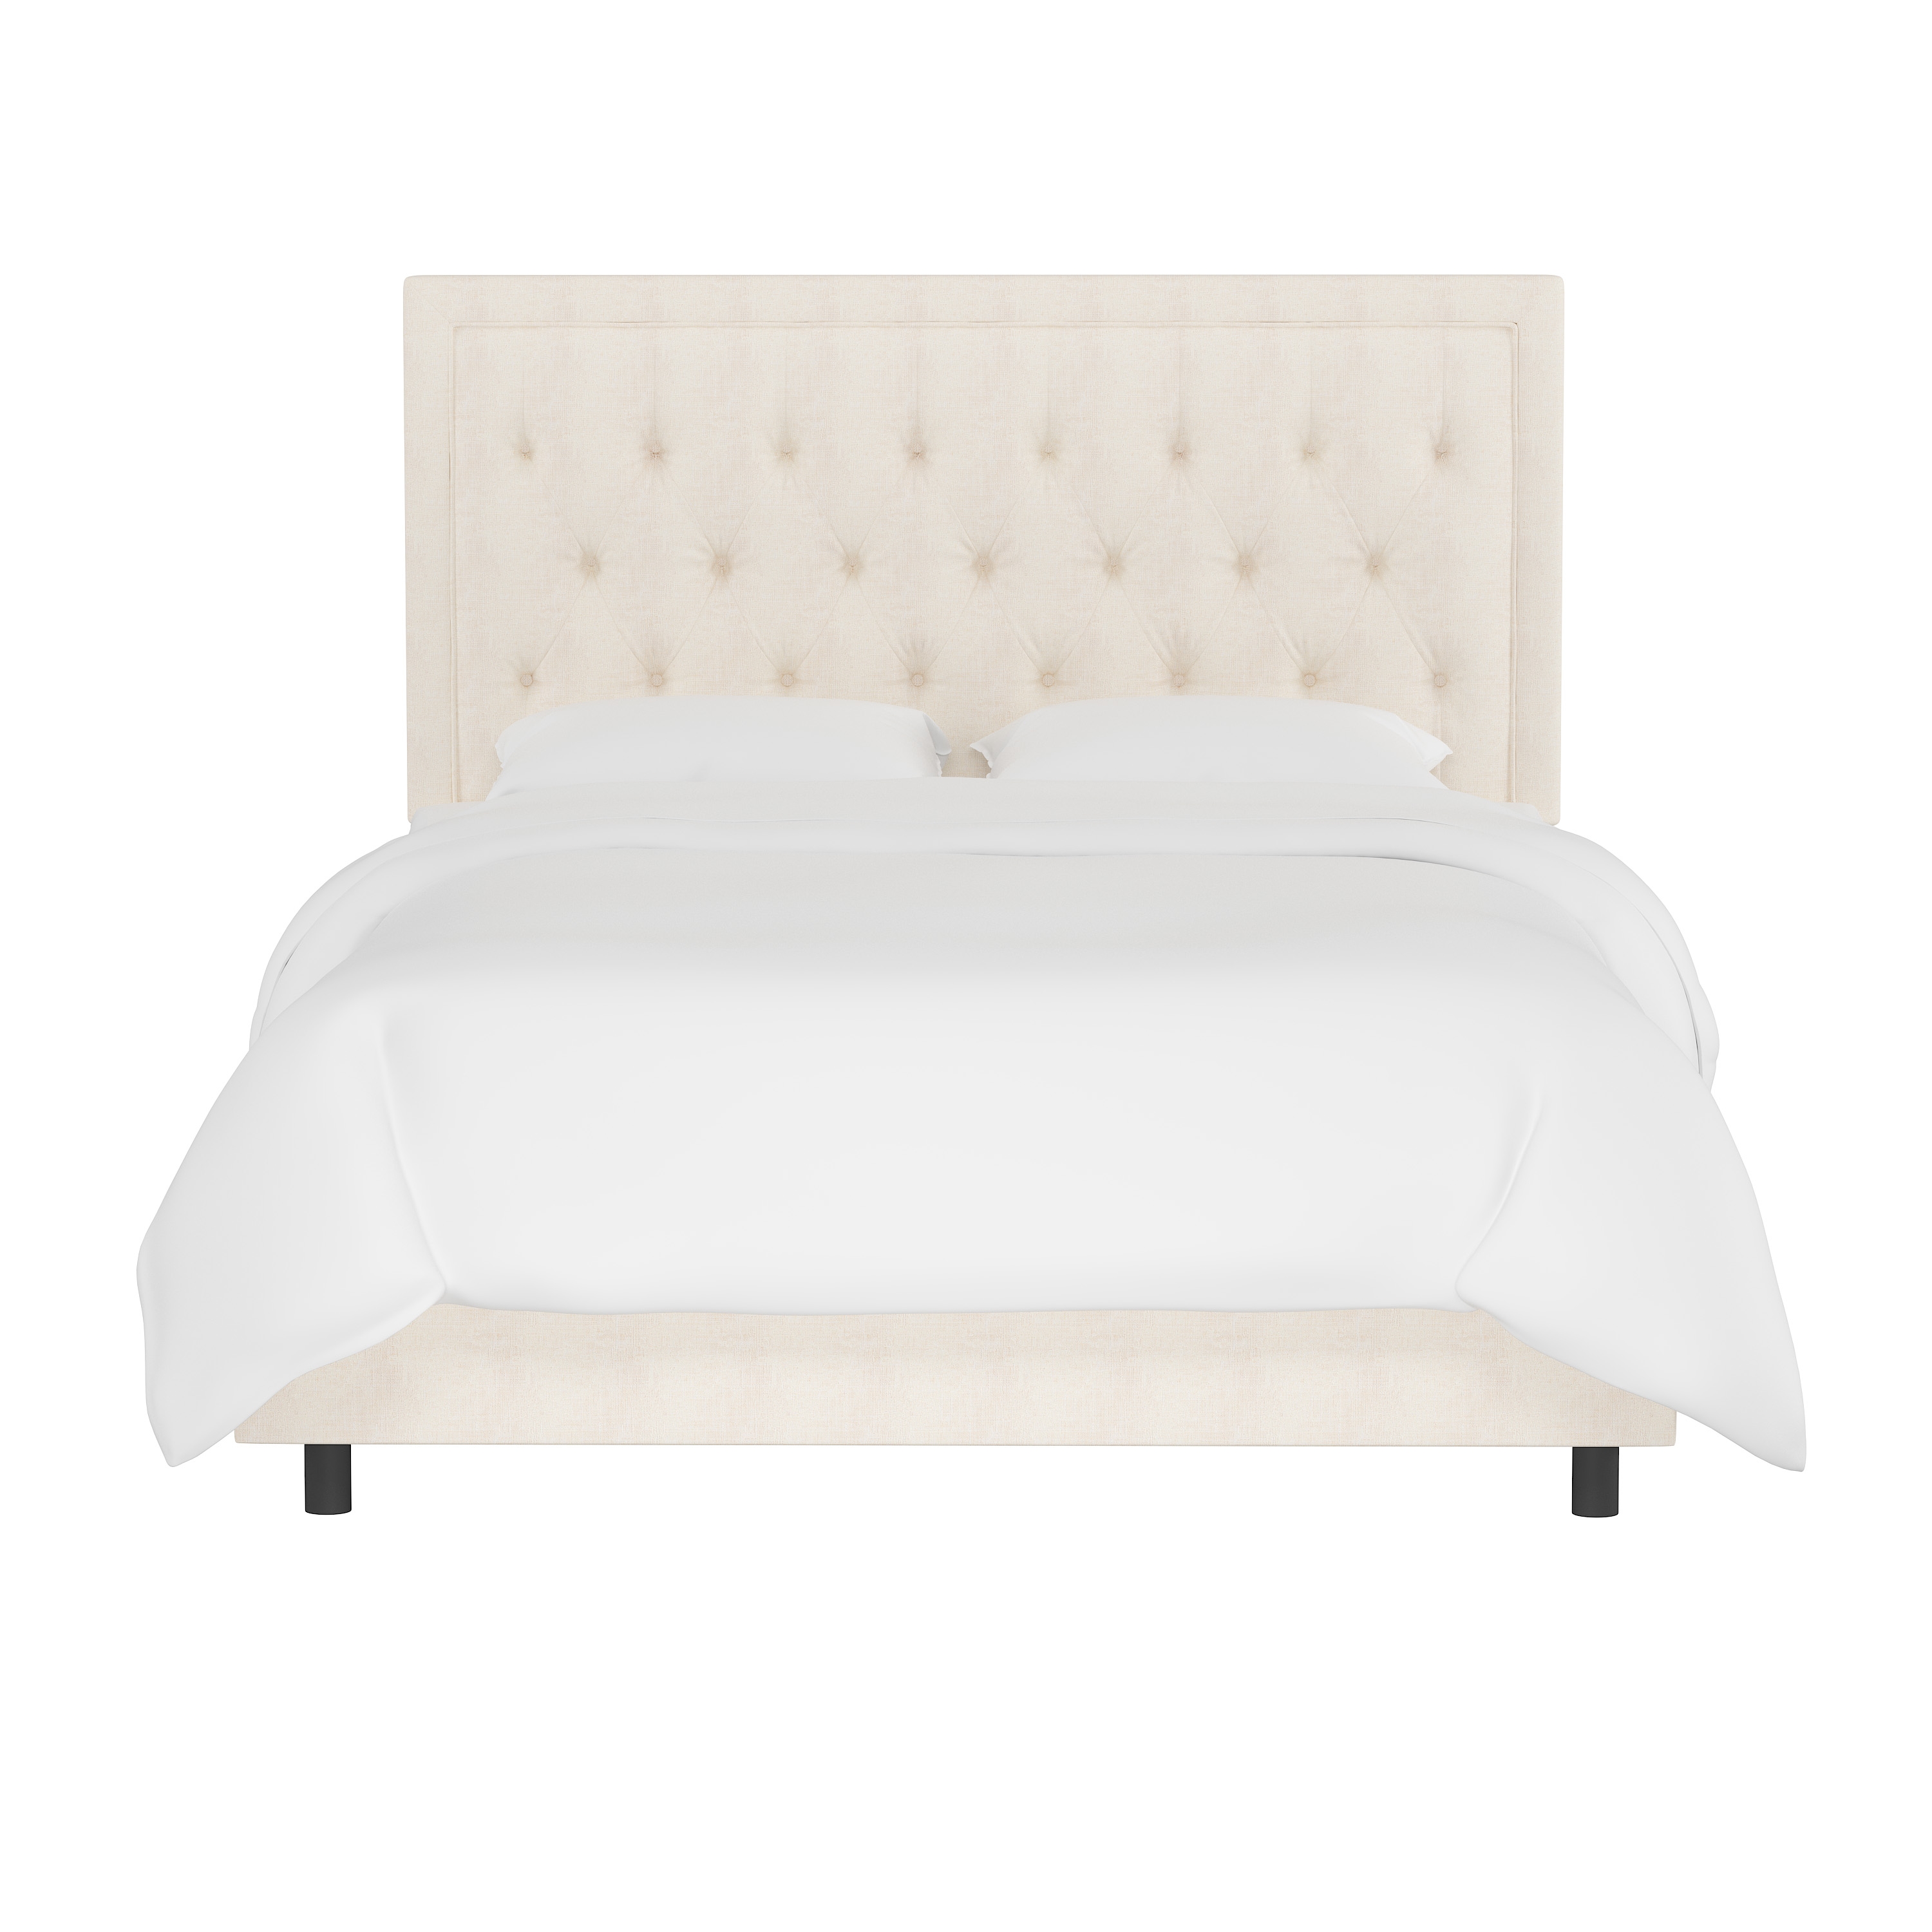 Lafayette Bed, California King, White - Image 0